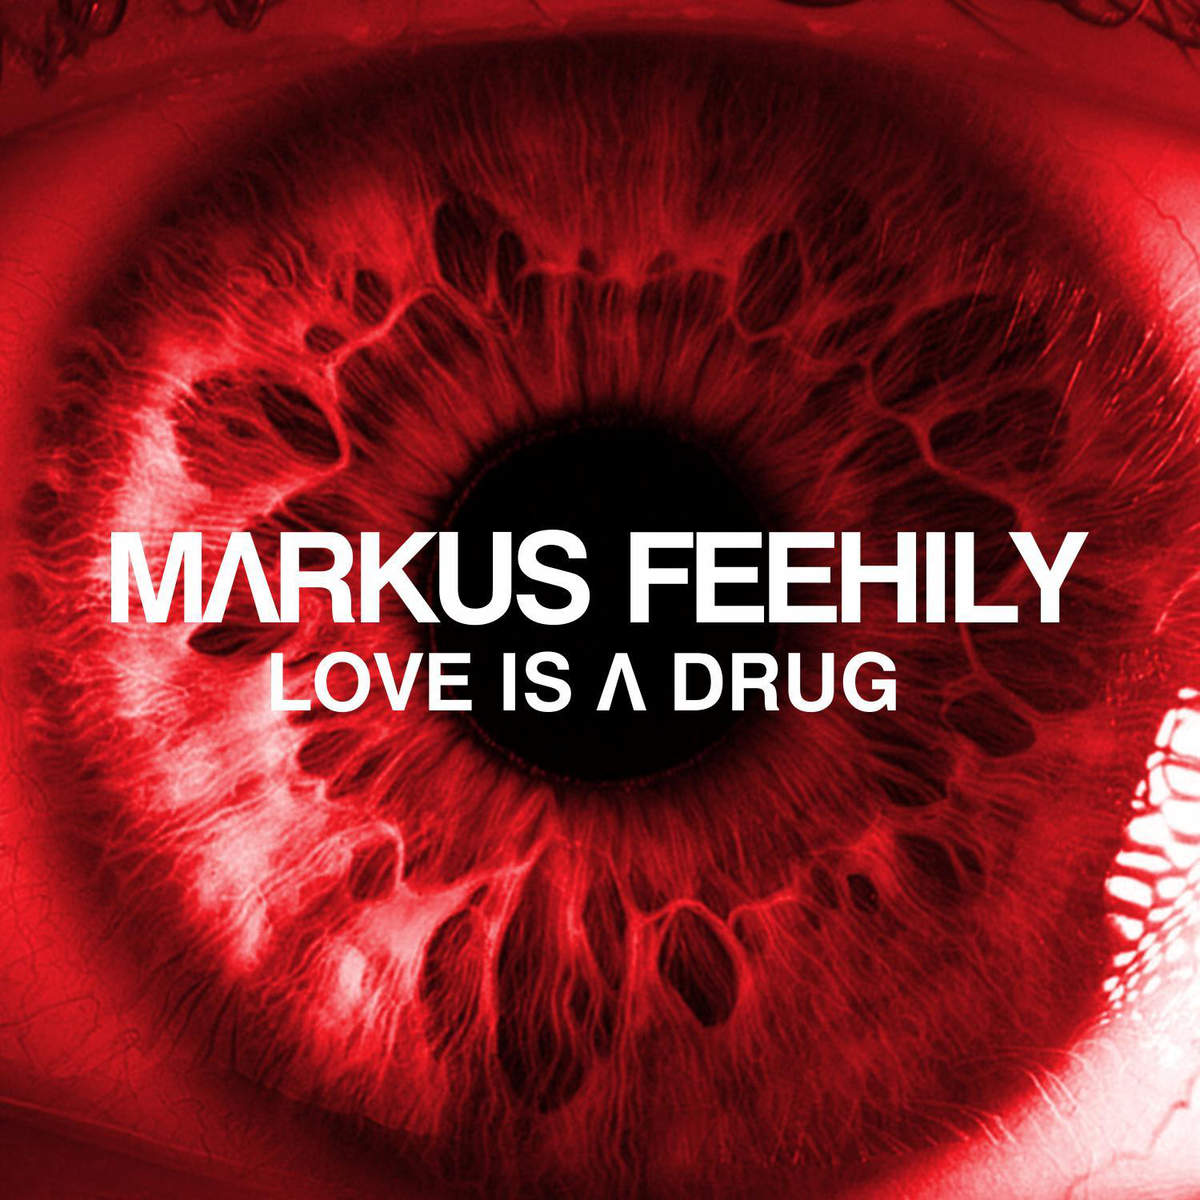 Love is drugs. Love is a drug Markus Feehily. New Politics Love is a drug. Love drug. Друг лов